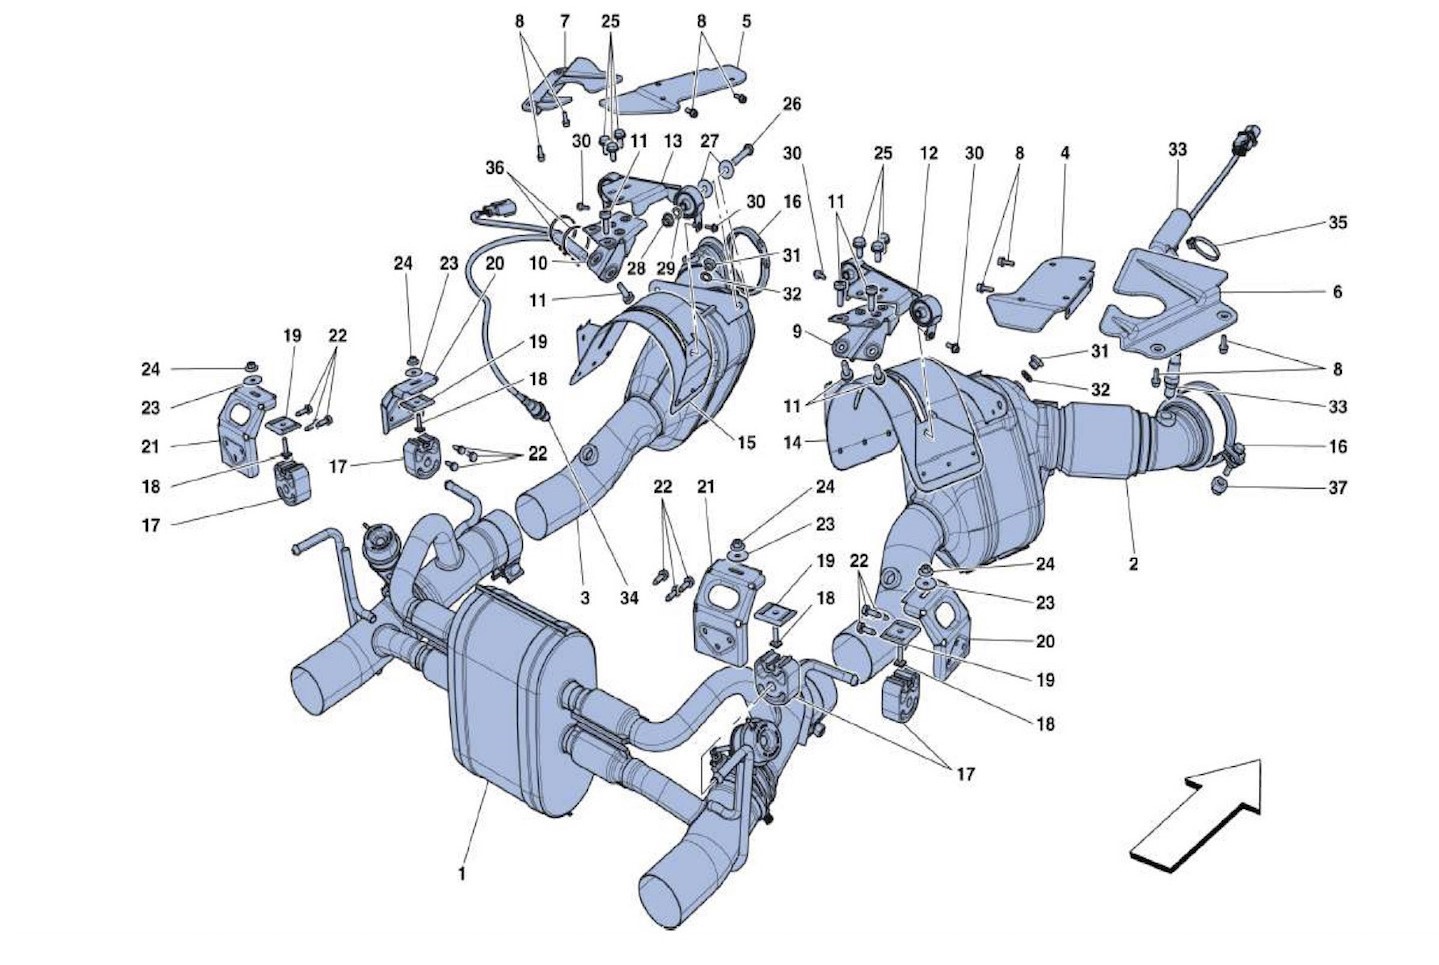 Lubrification System Classic Ferrari Parts Schematics My Xxx Hot Girl